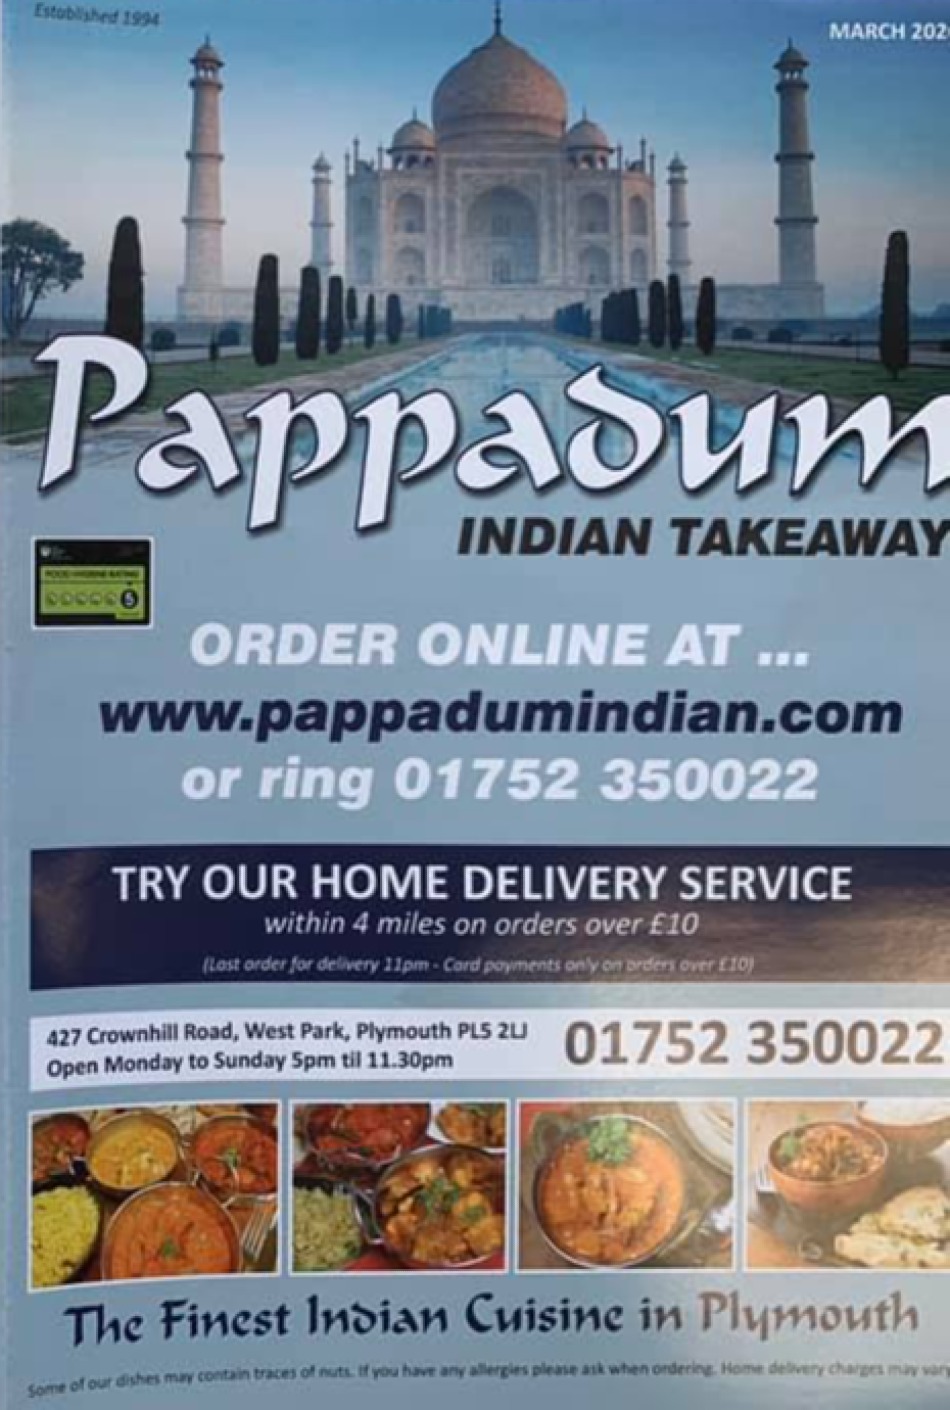 Takeaway Restaurant Menu Page - Pappadum Indian Takeaway - Plymouth